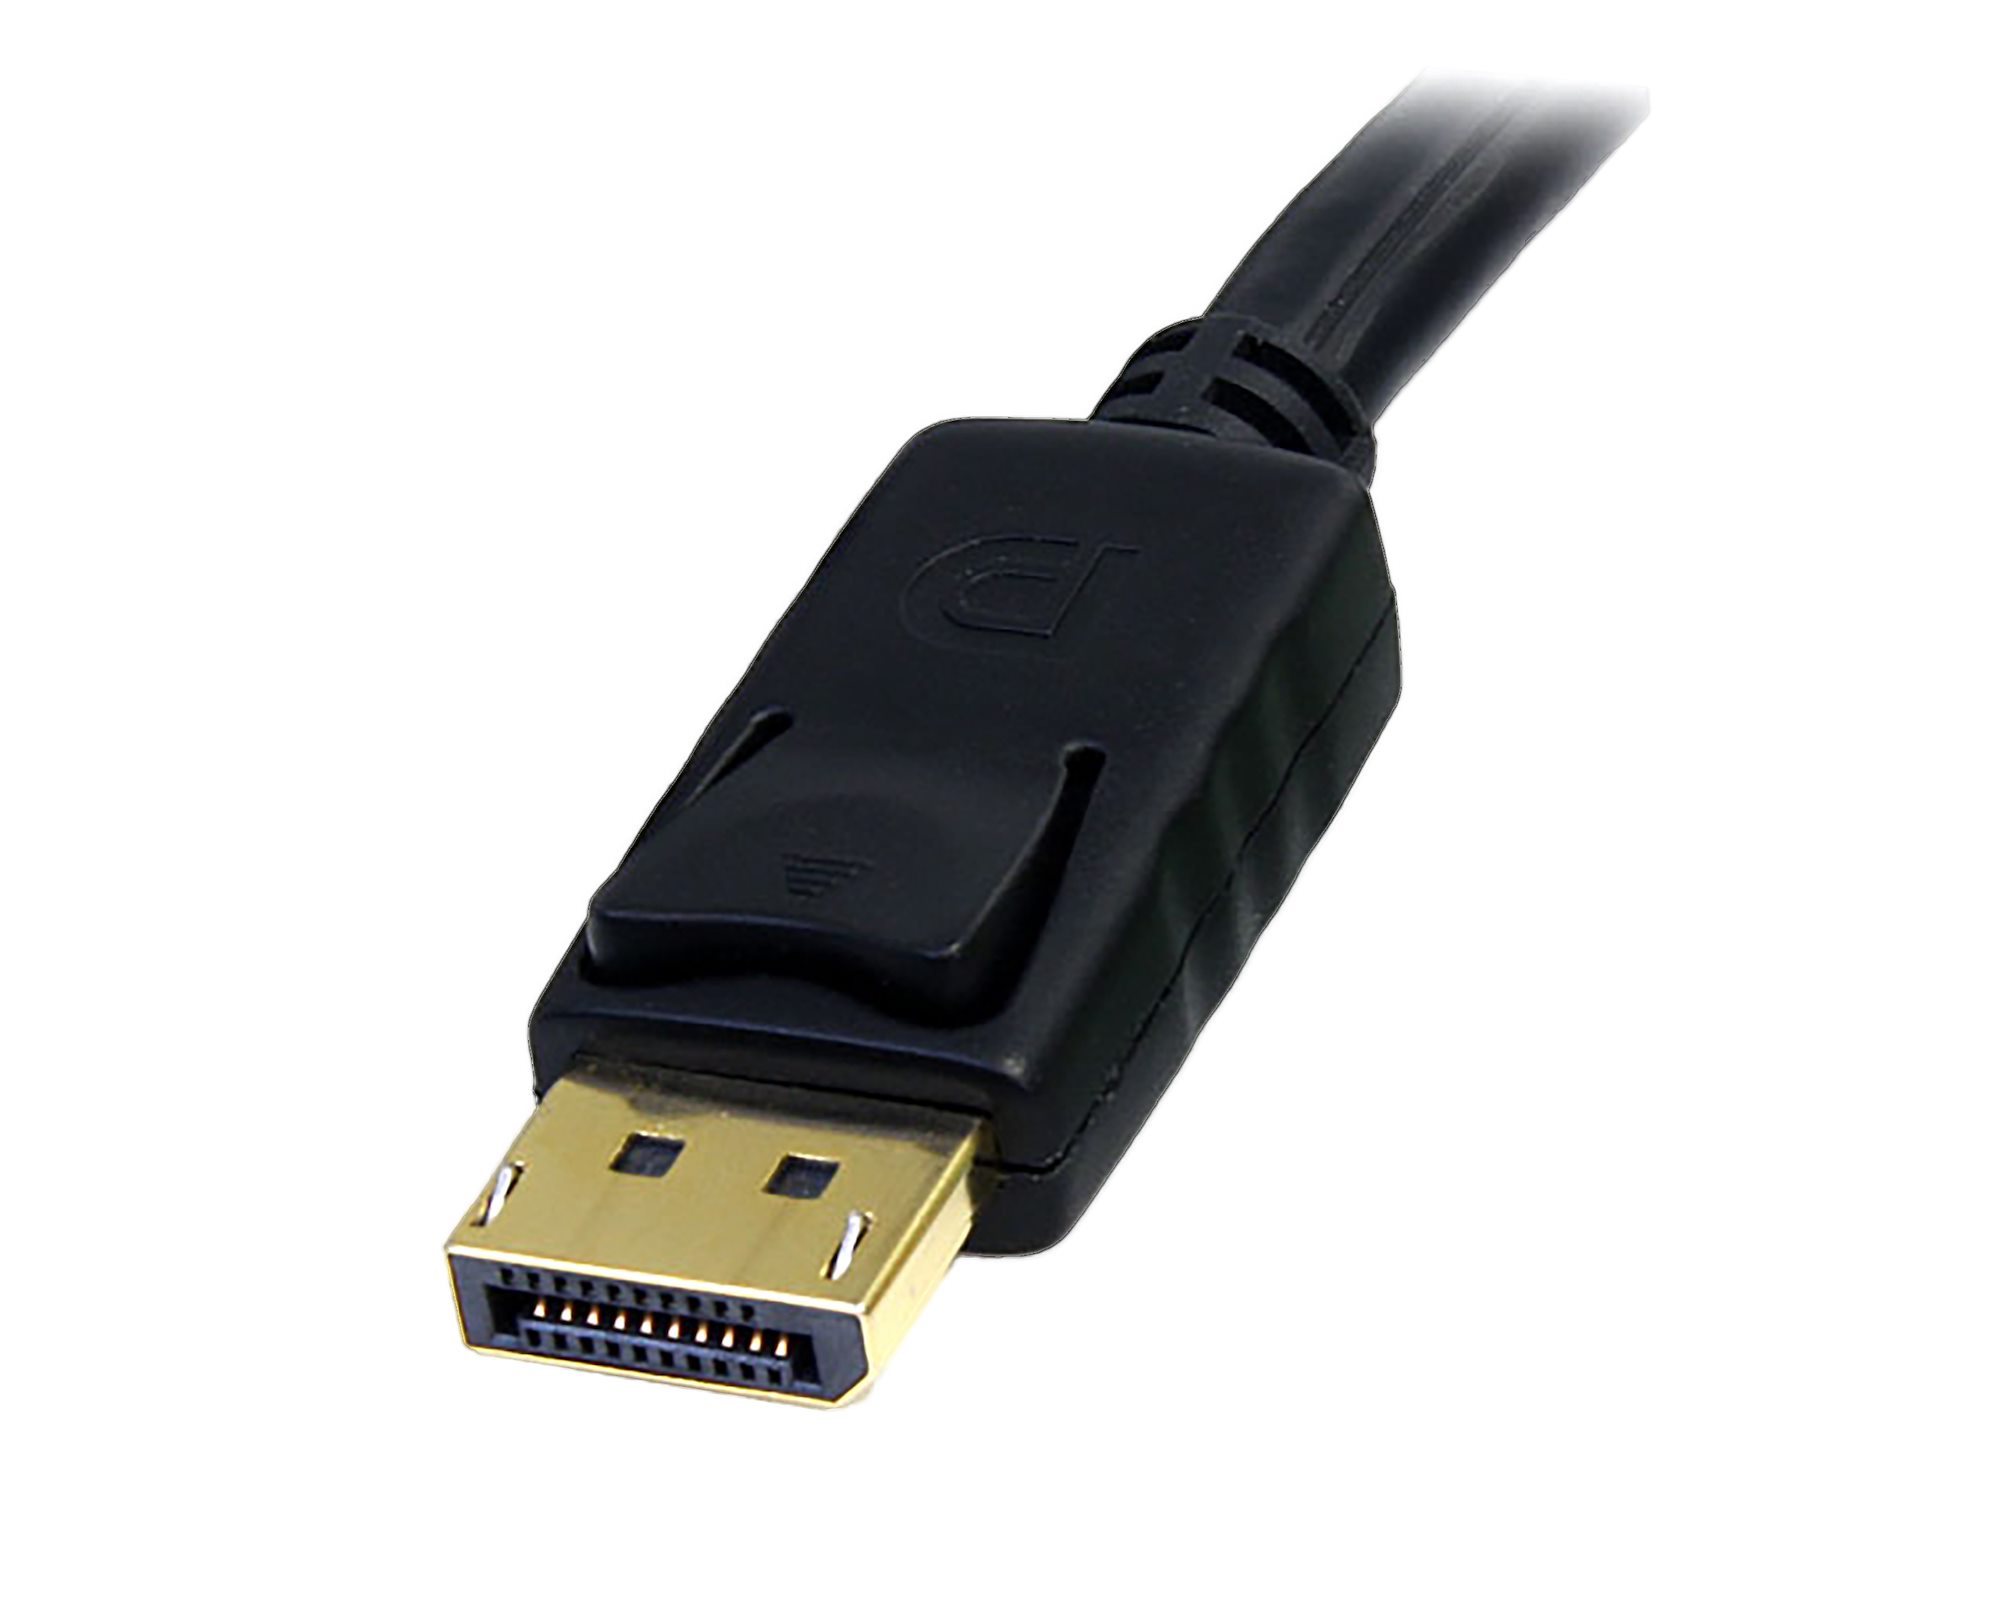 4-in-1 USB DisplayPort KVM Switch Cable - KVM Cables, Server Management